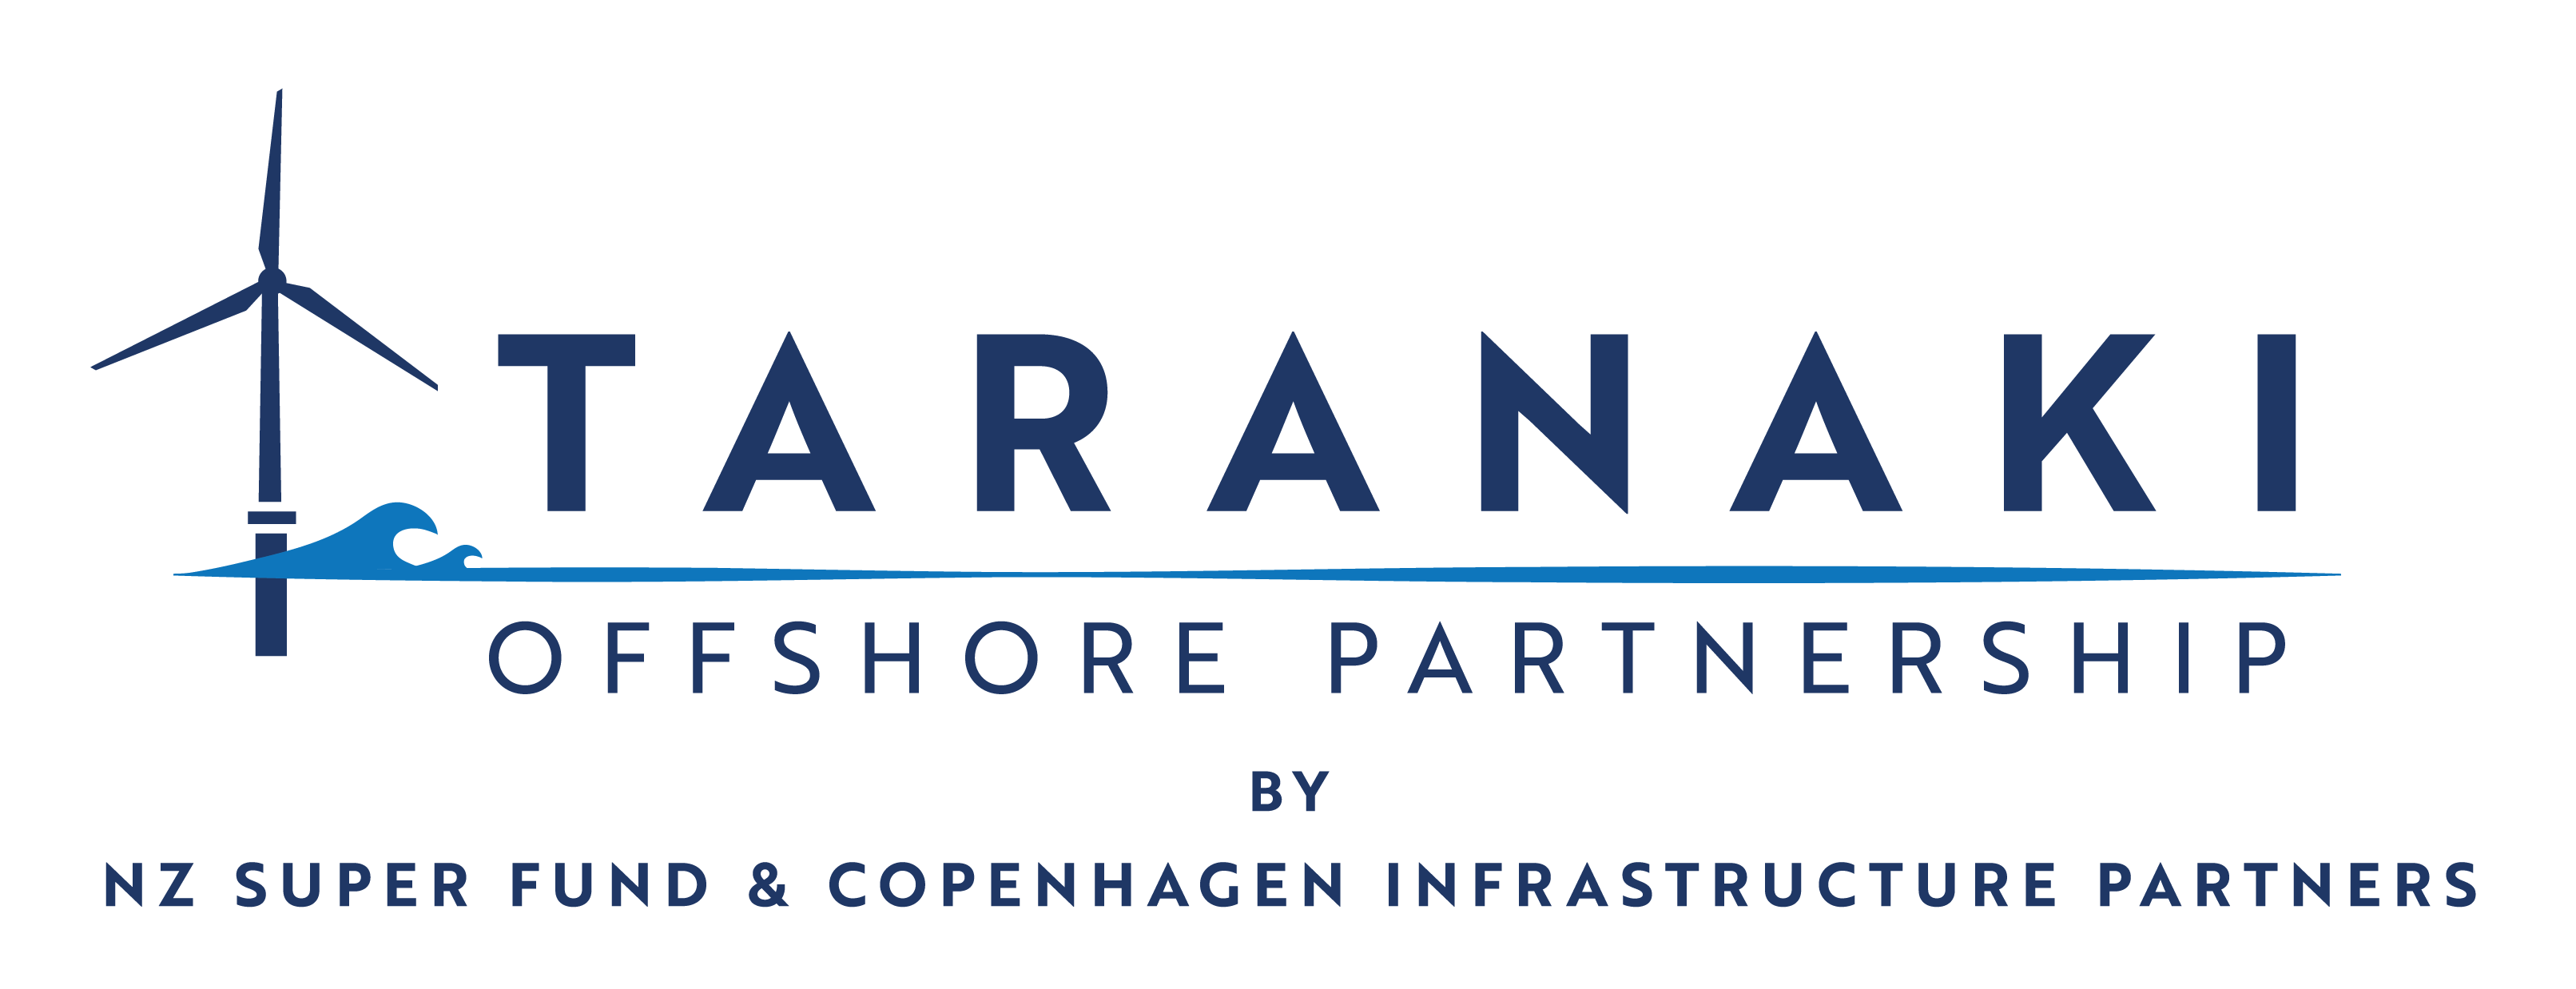 Taranaki Offshore Partnership